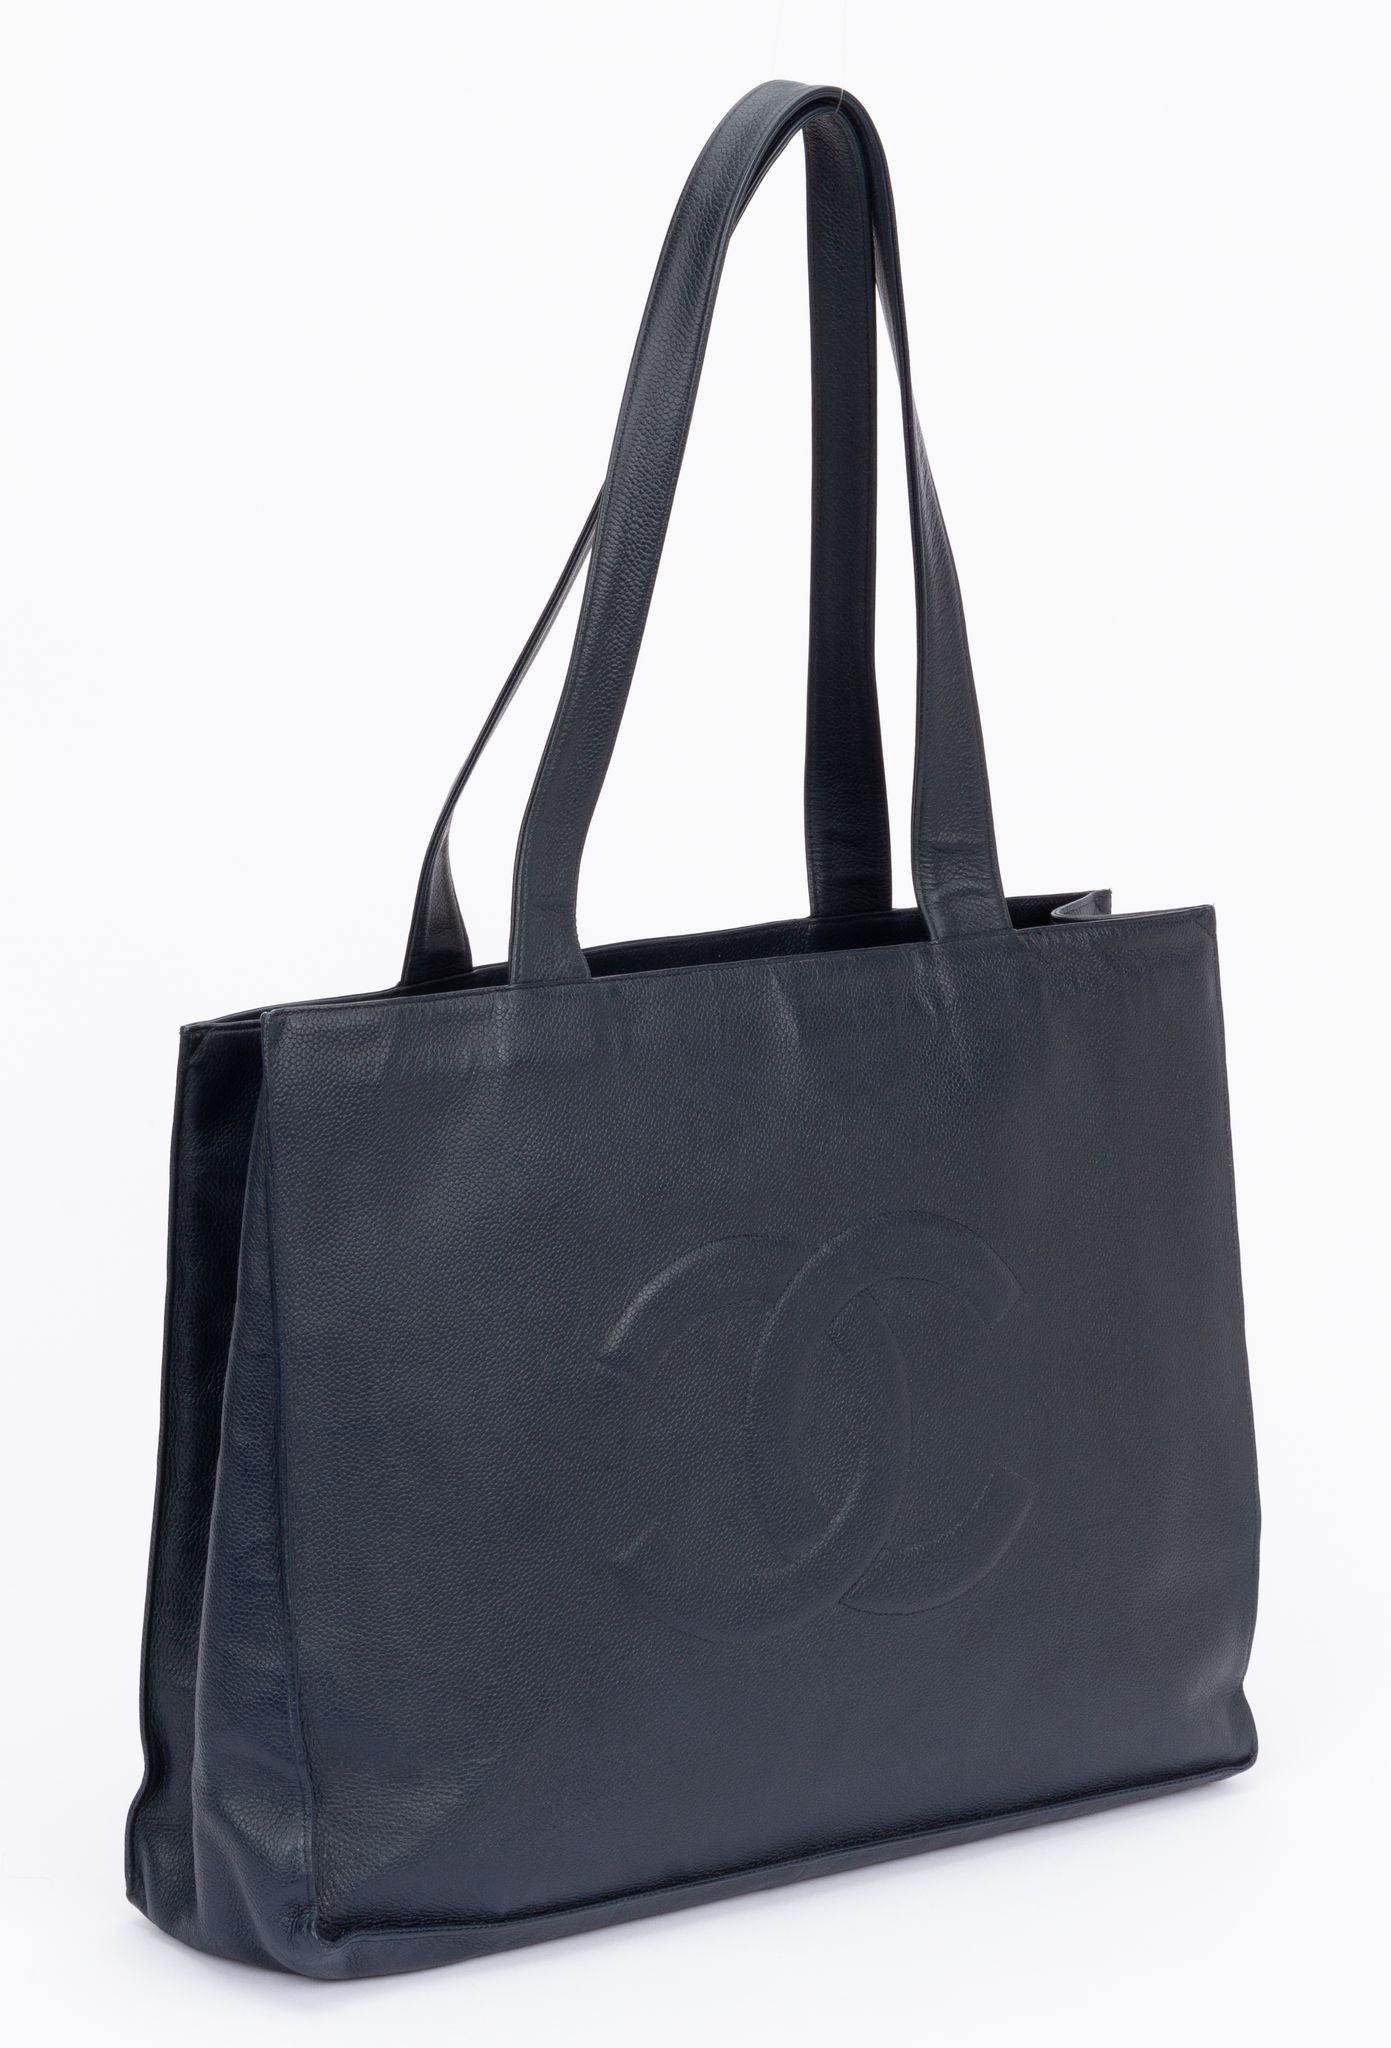 Chanel CC Motif 90s Shoulder tote Bag - Vintage Lux